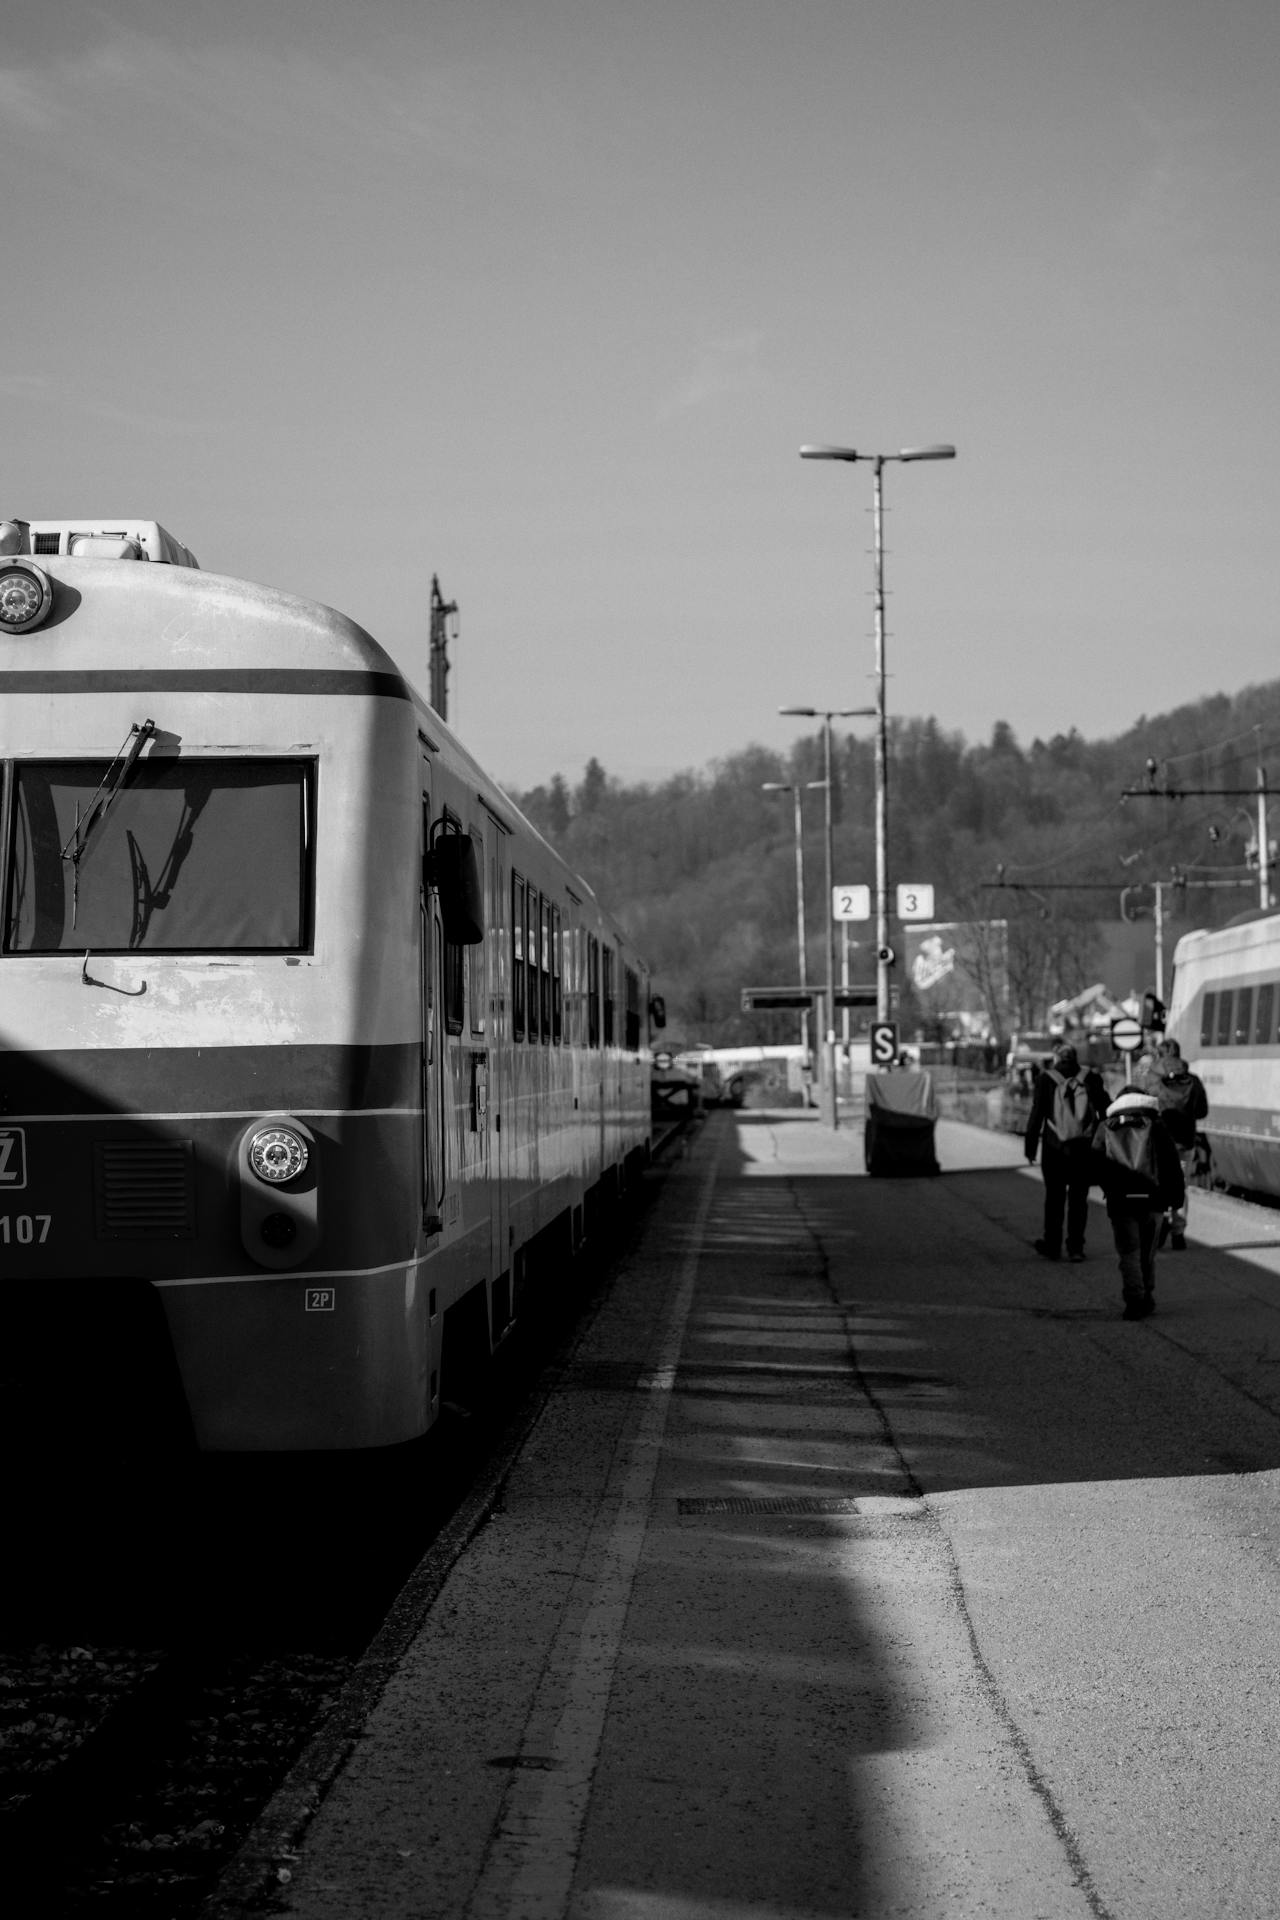 Train at a platform at the Ljubljana Train Station